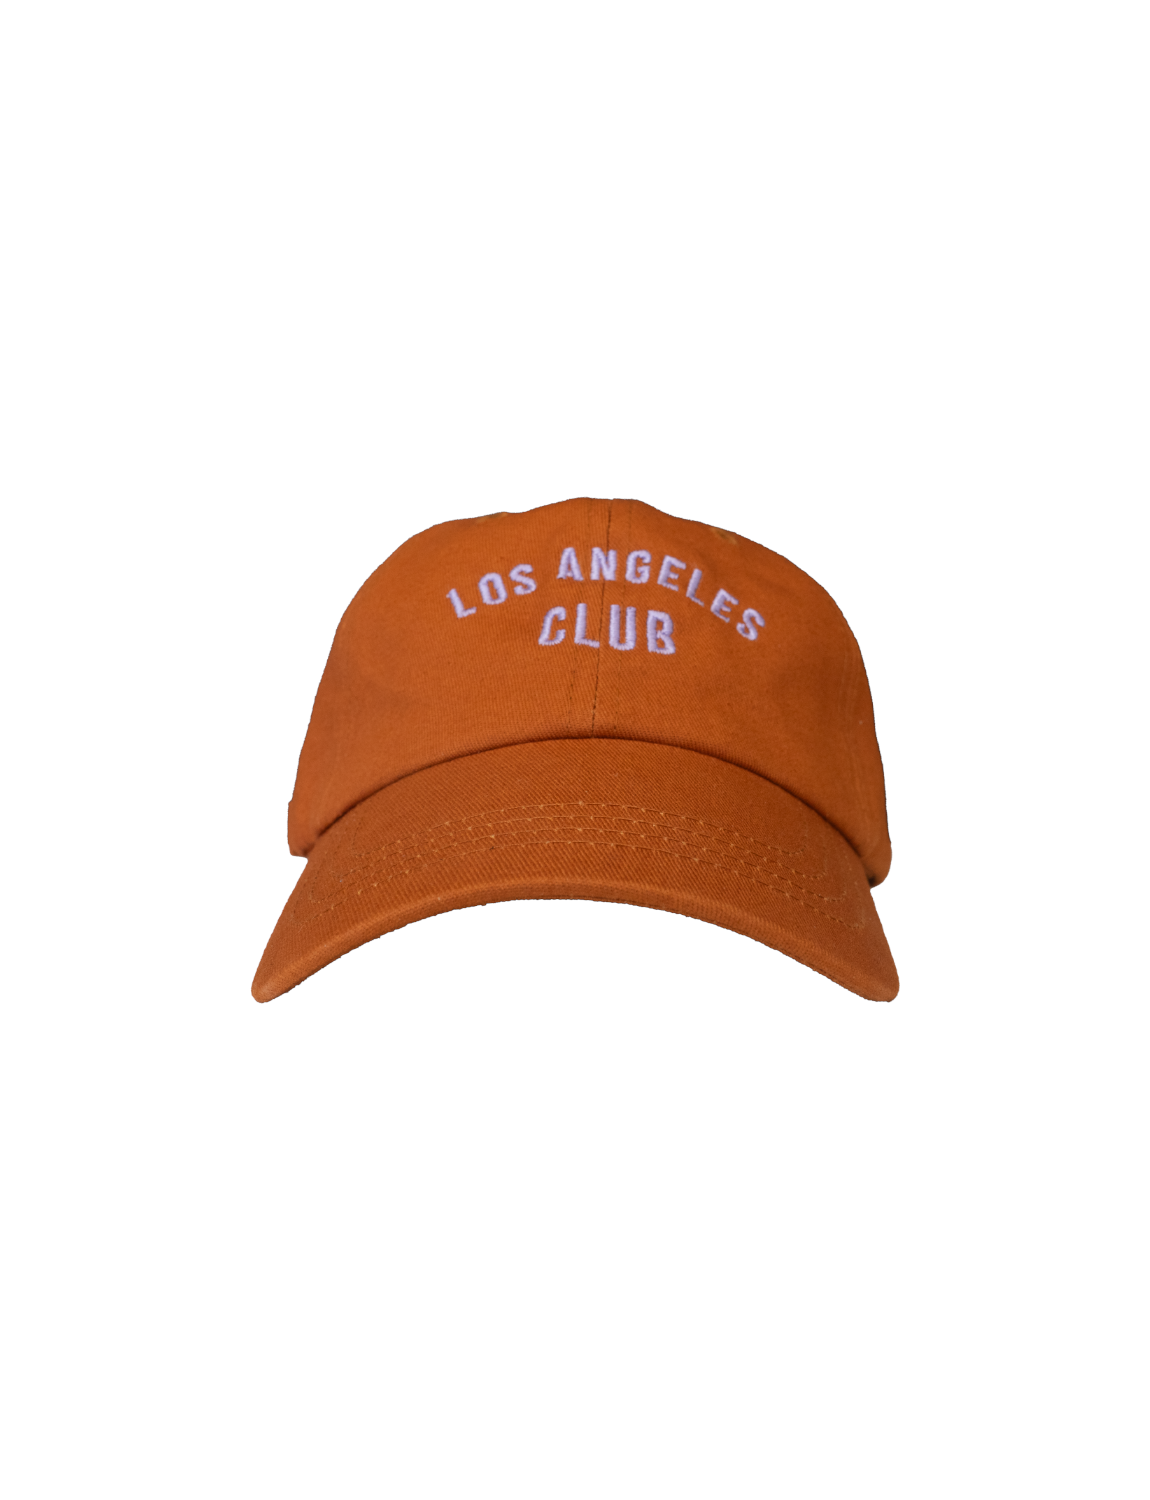 SOOF LOS ANGELES CLUB Hat-Cotton